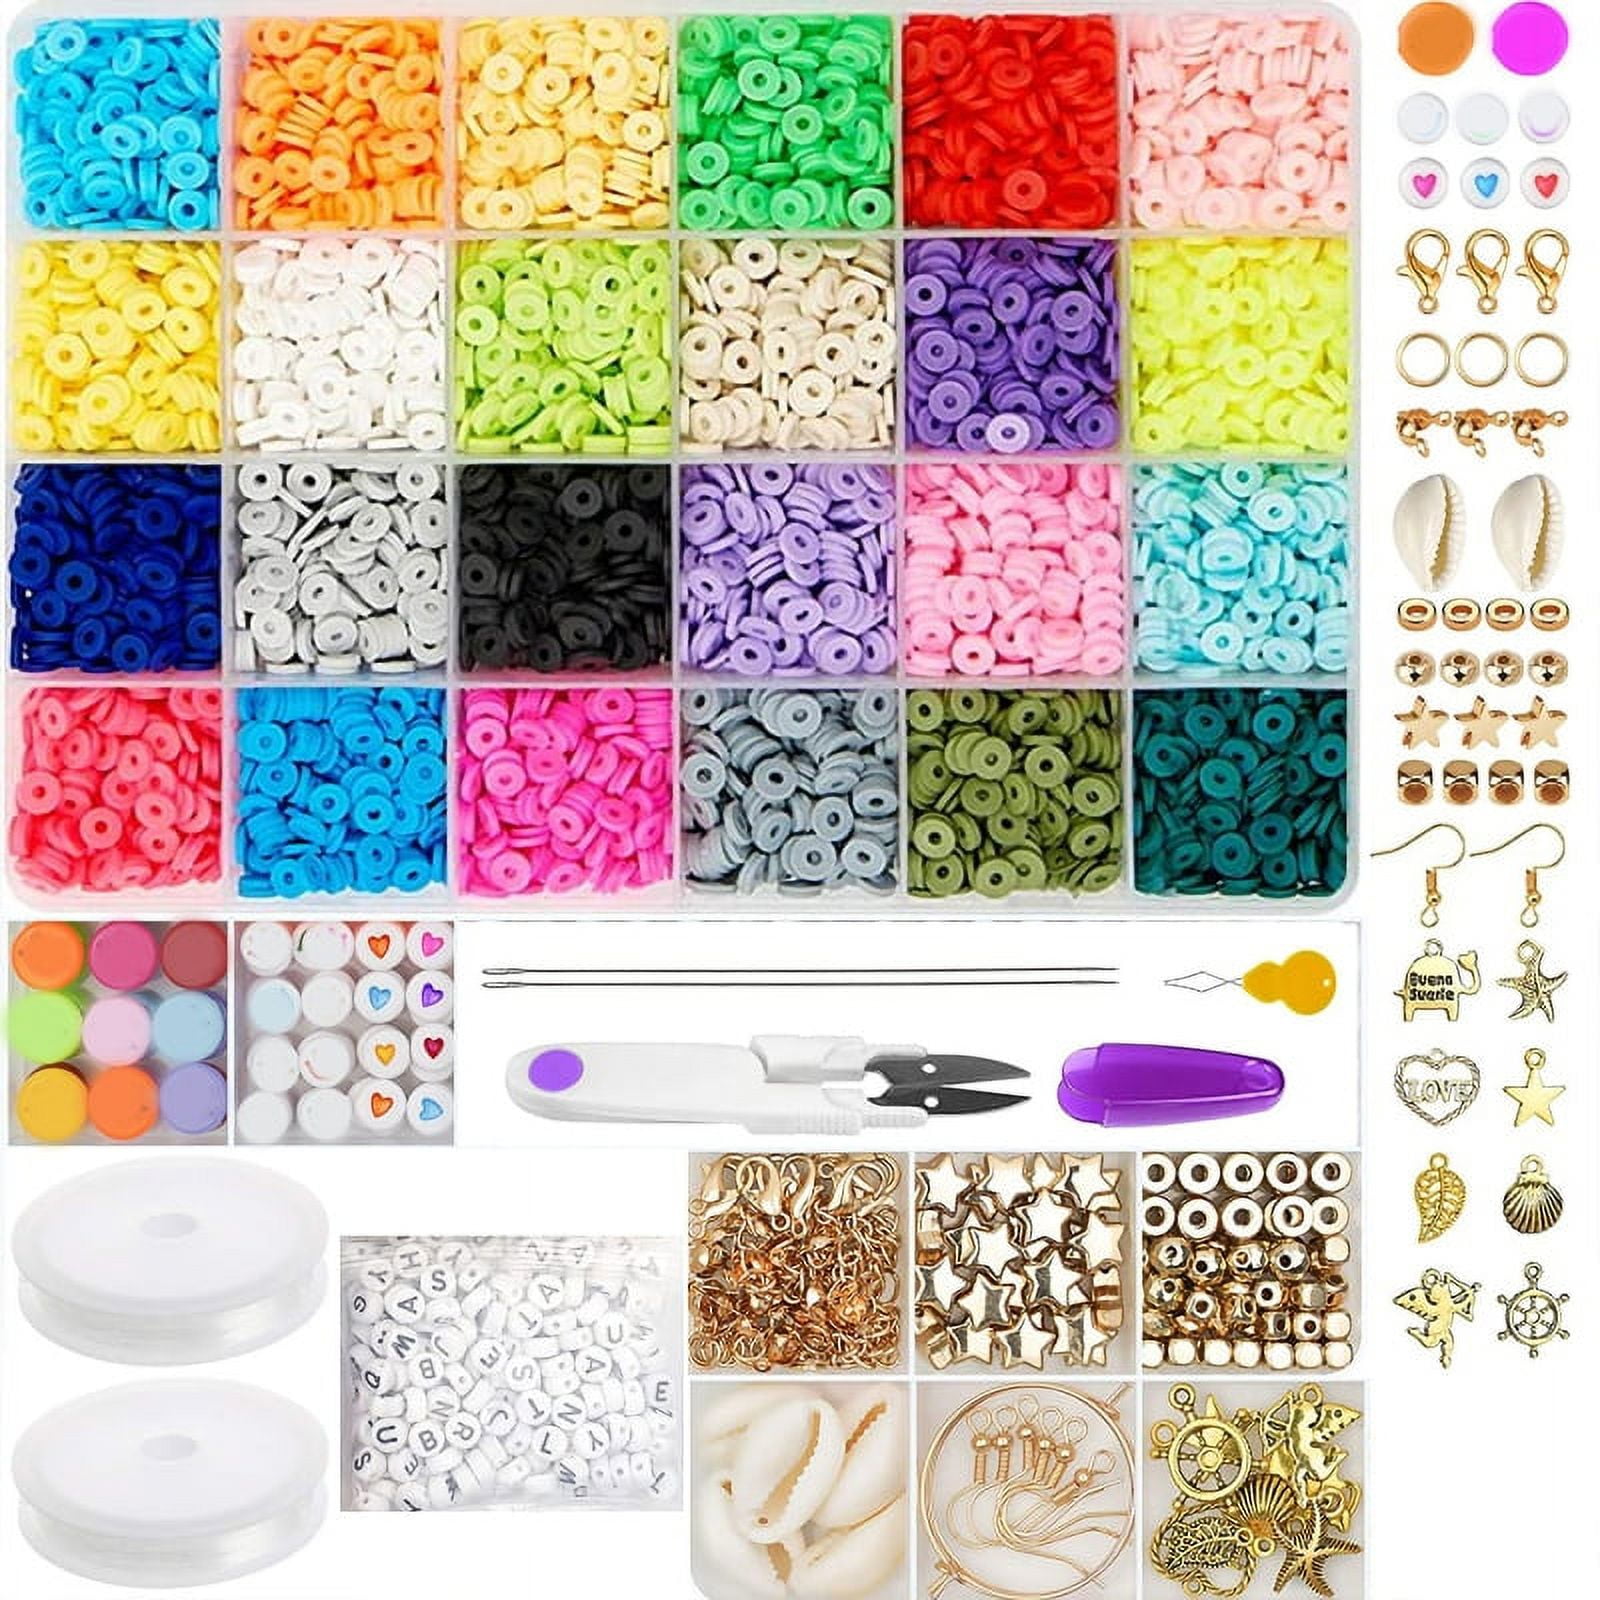 200 Pcs Smiley Face Beads For Bracelet Making, Arts And Crafts, Bracelet  Making Kit, Colorful Smiley Beads, Jewellery Making Kit